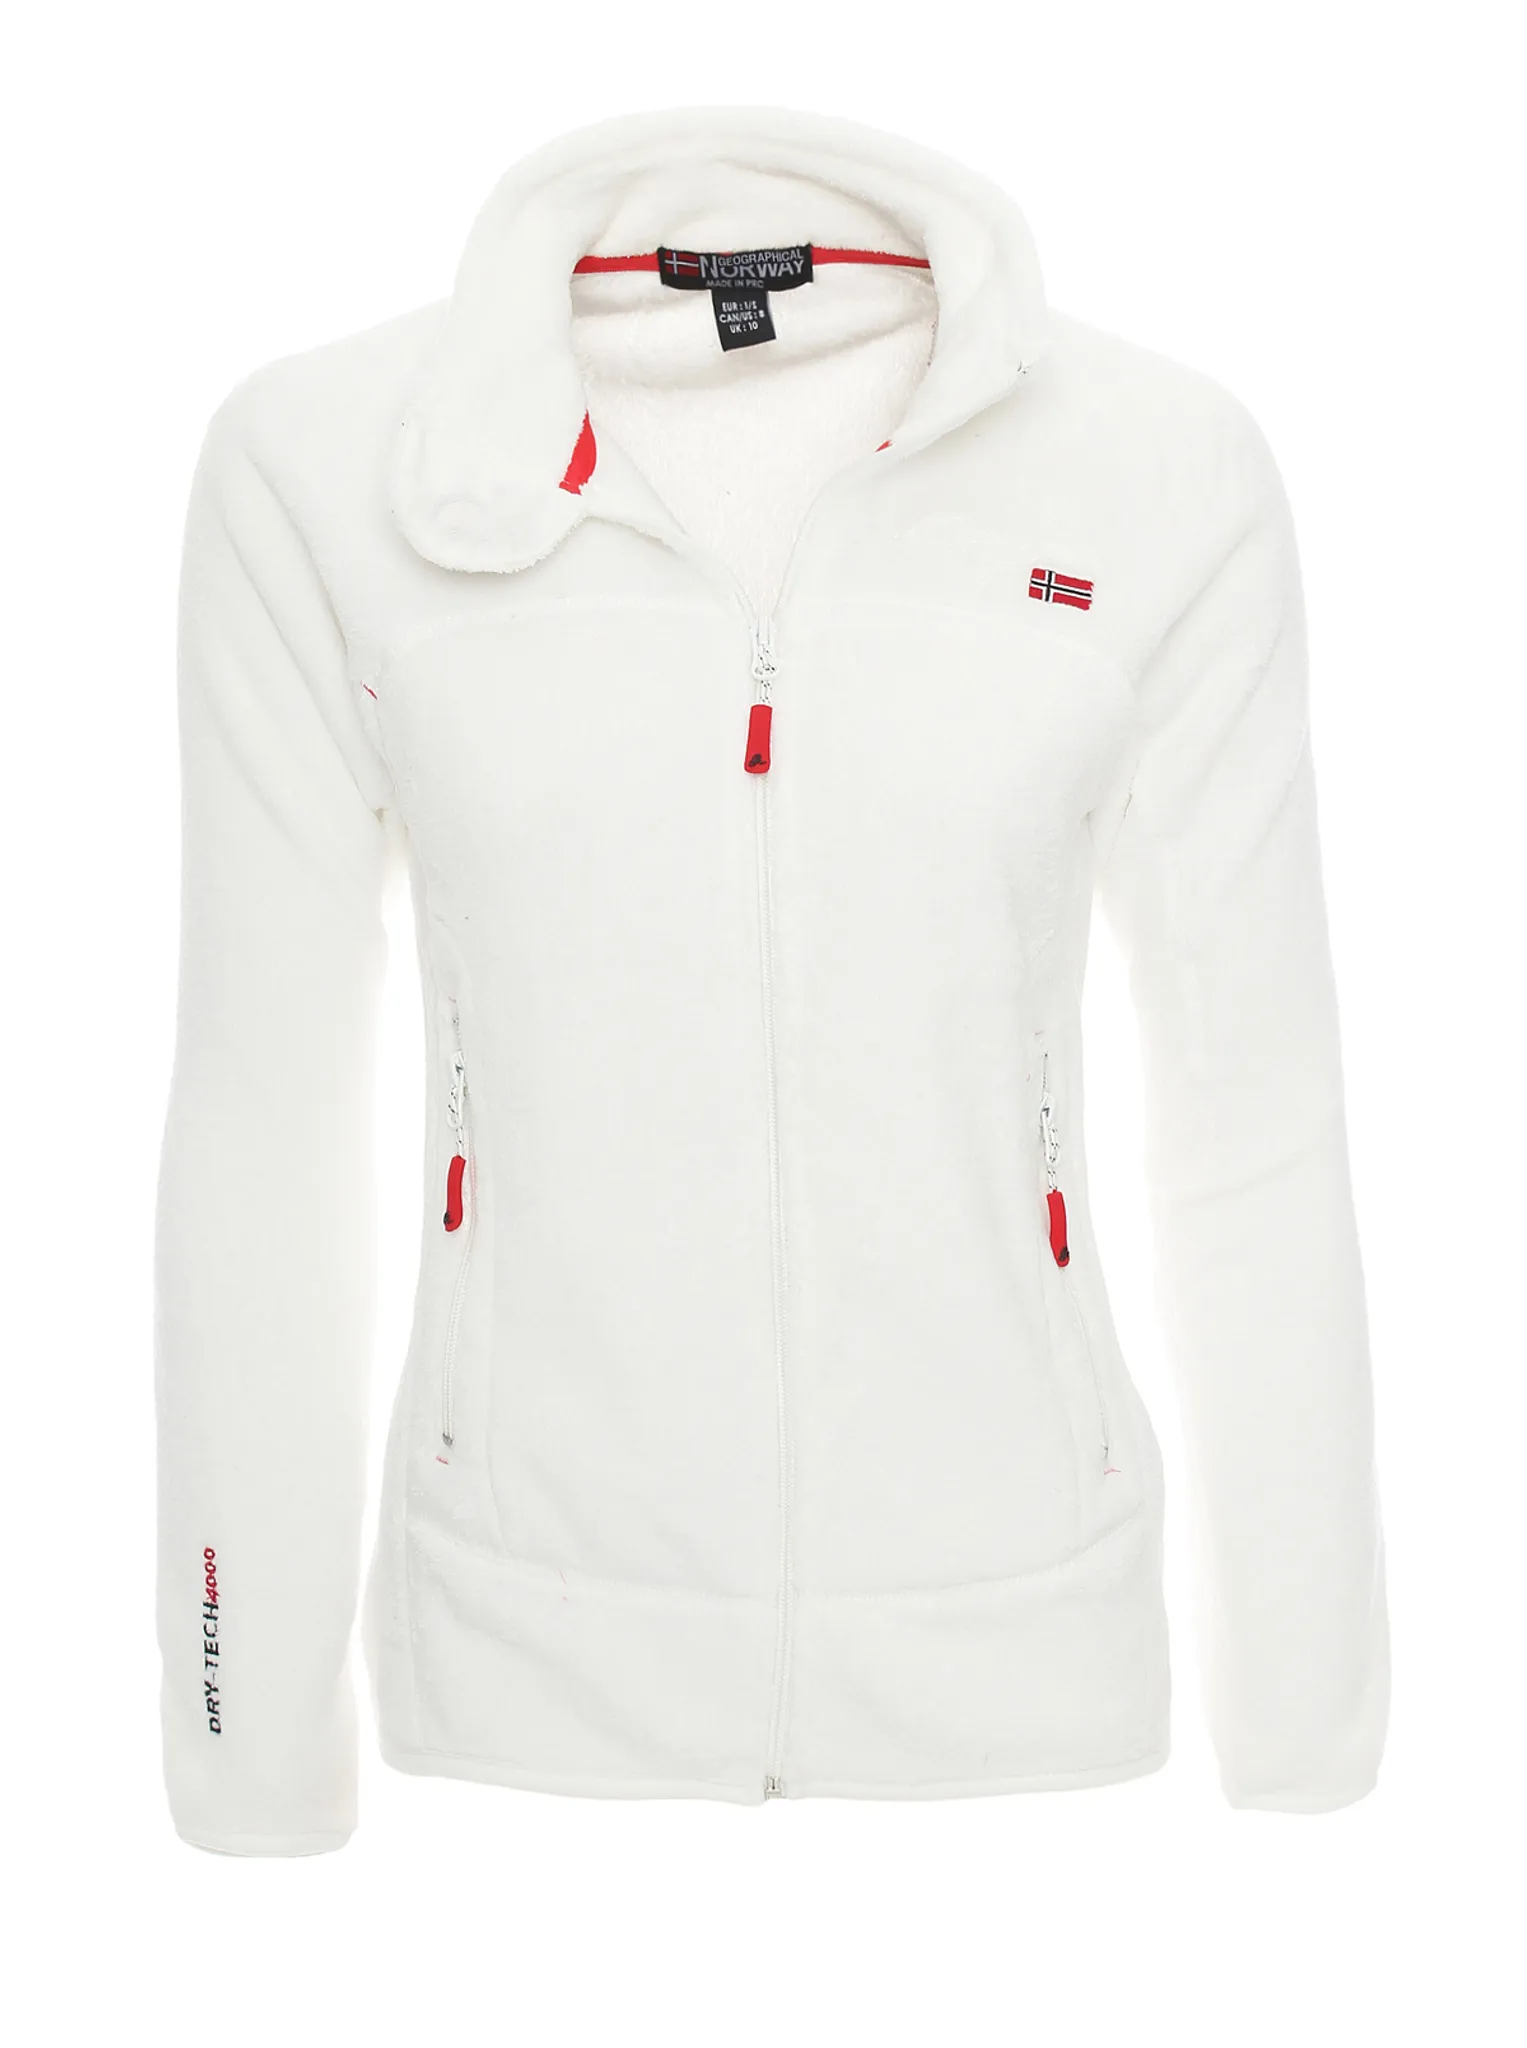 Geographical Norway Damen warme flauschige Fleece Jacke Outdoor Sweater Ski  Sport Freizeit Model